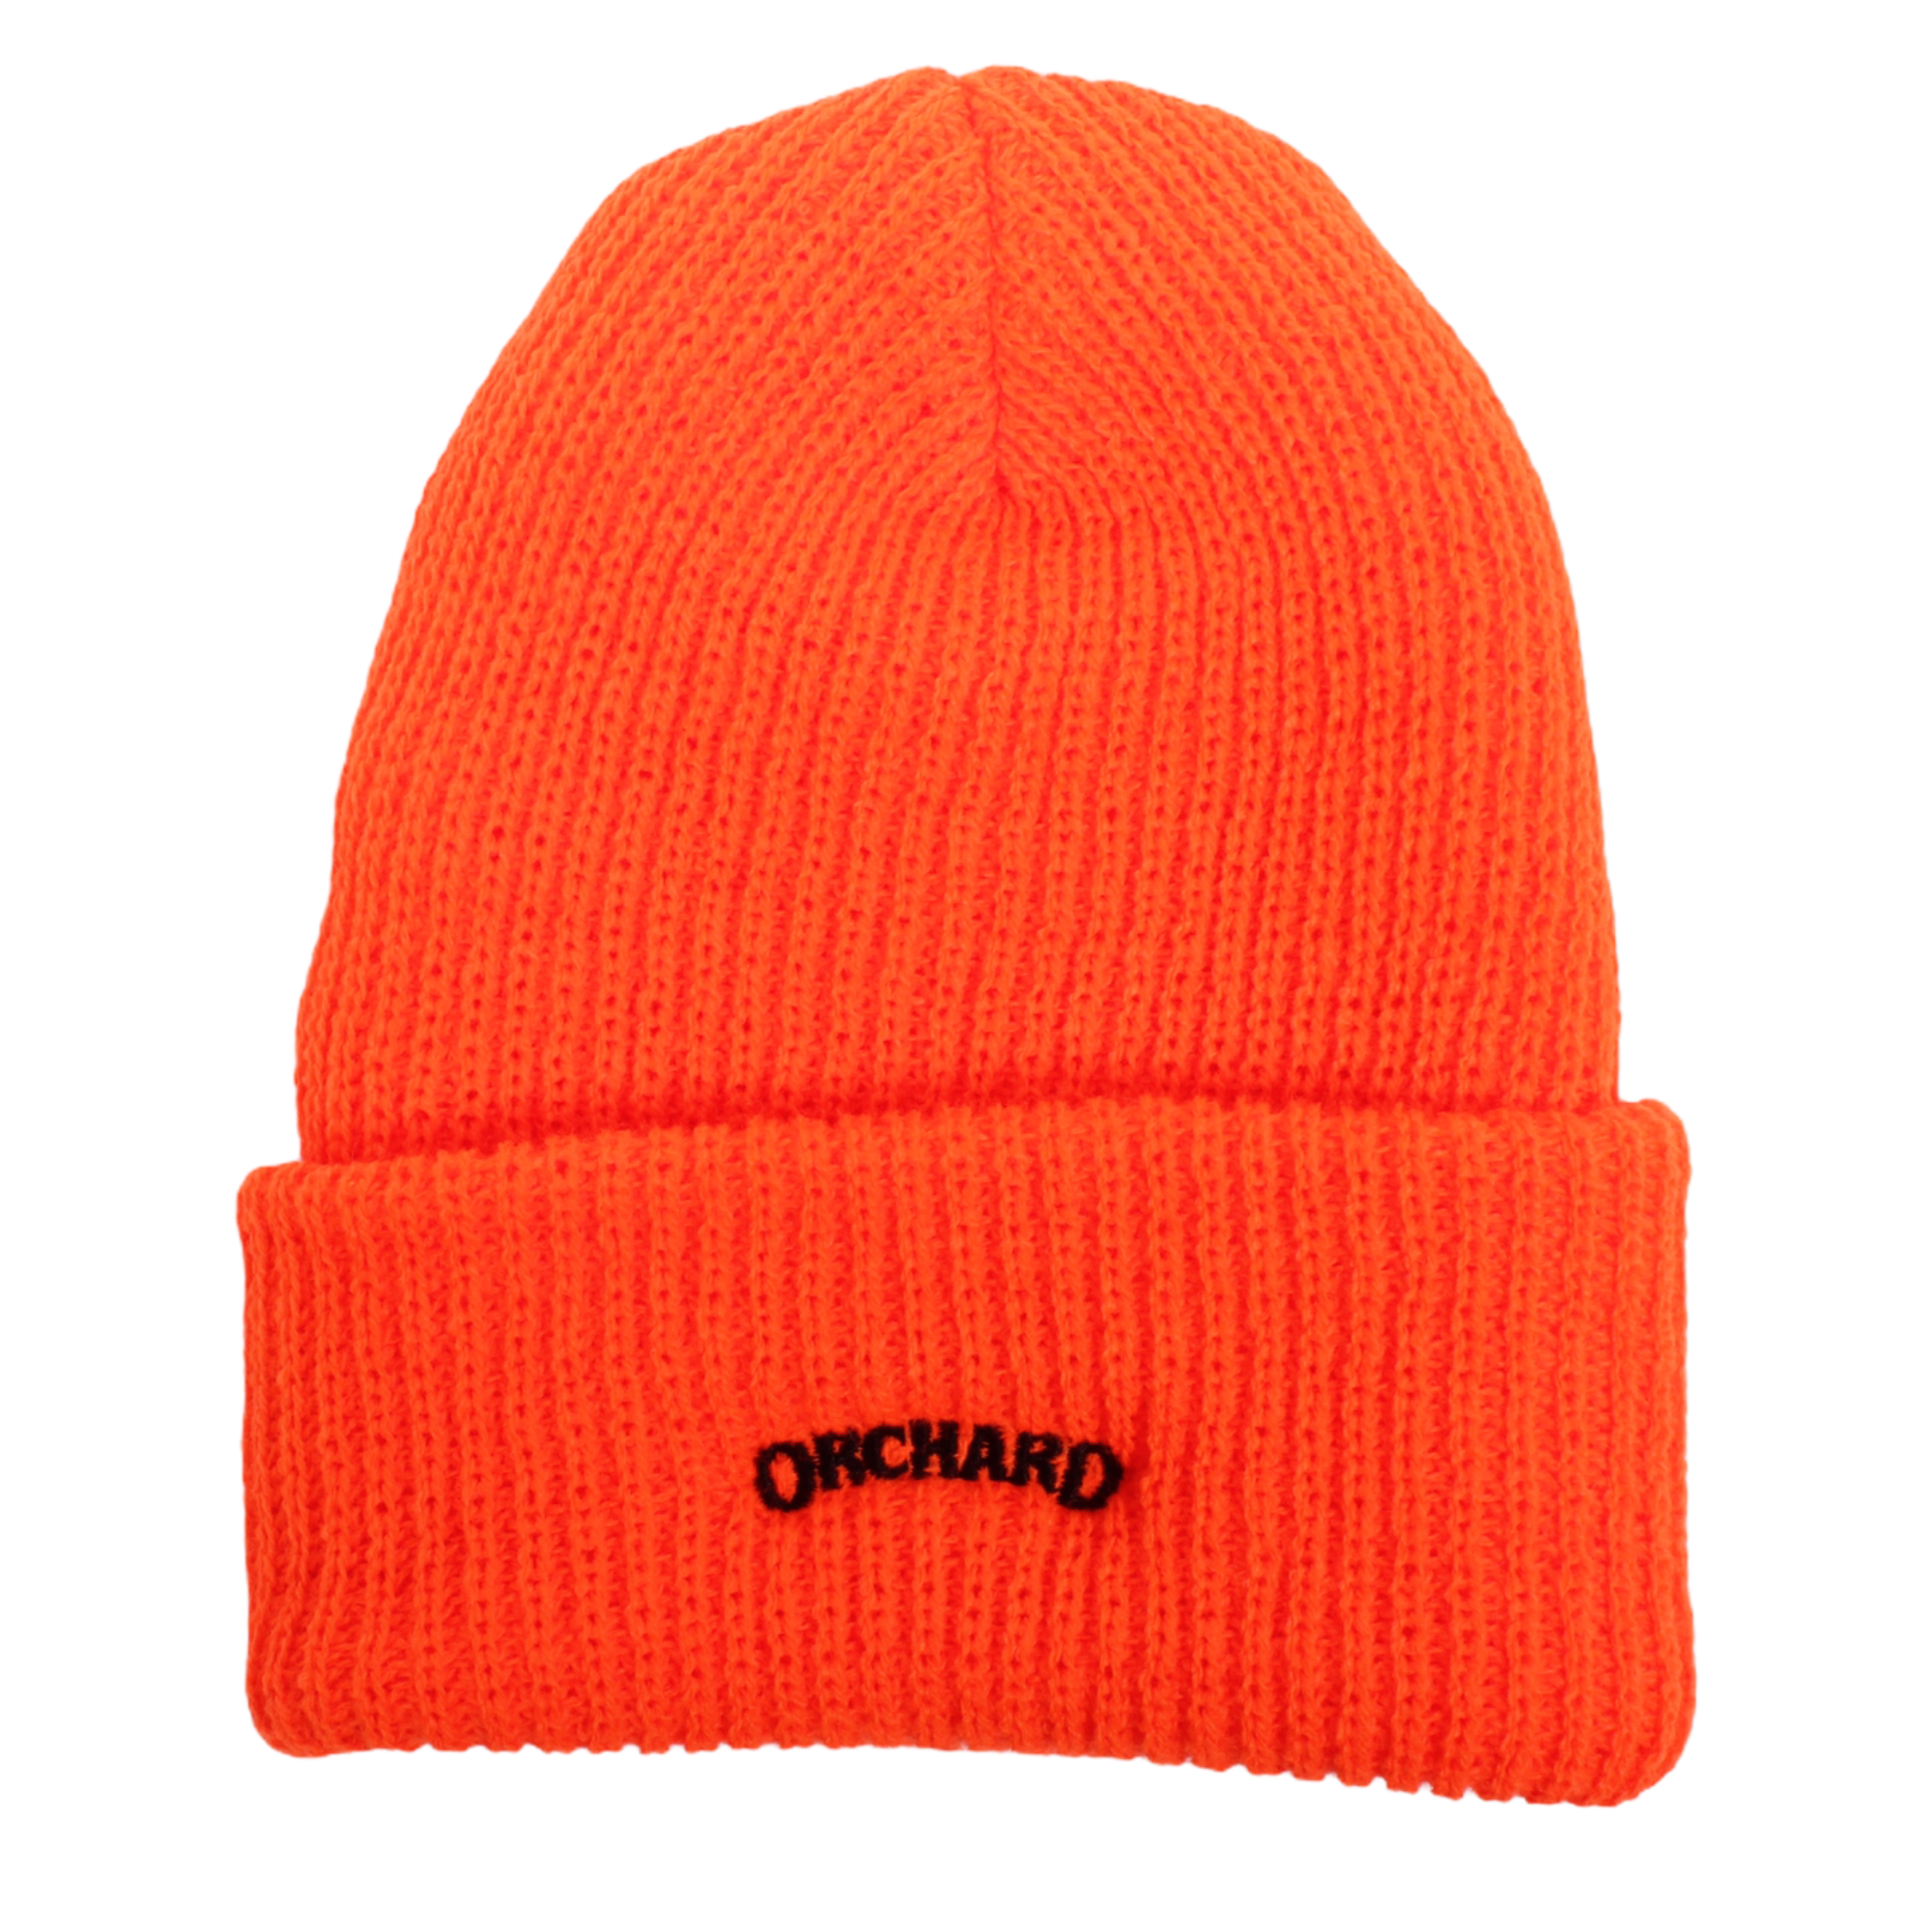 Orchard Text Logo Watch Cap Orange/Black